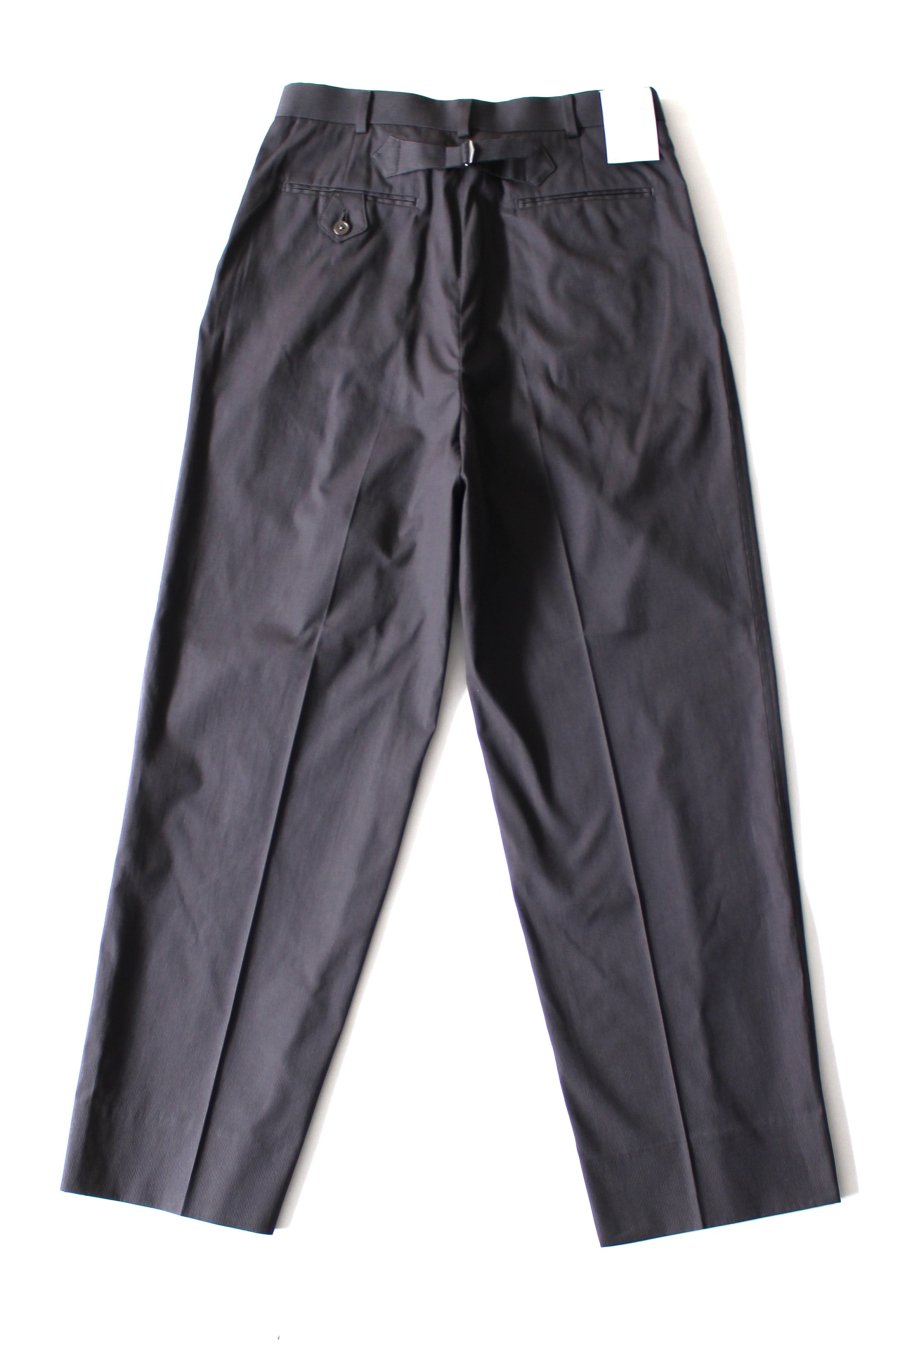 CIOTA（シオタ）CIOTA × J.PRESS 2 Pleats Oxford bags Trousers 公式通販